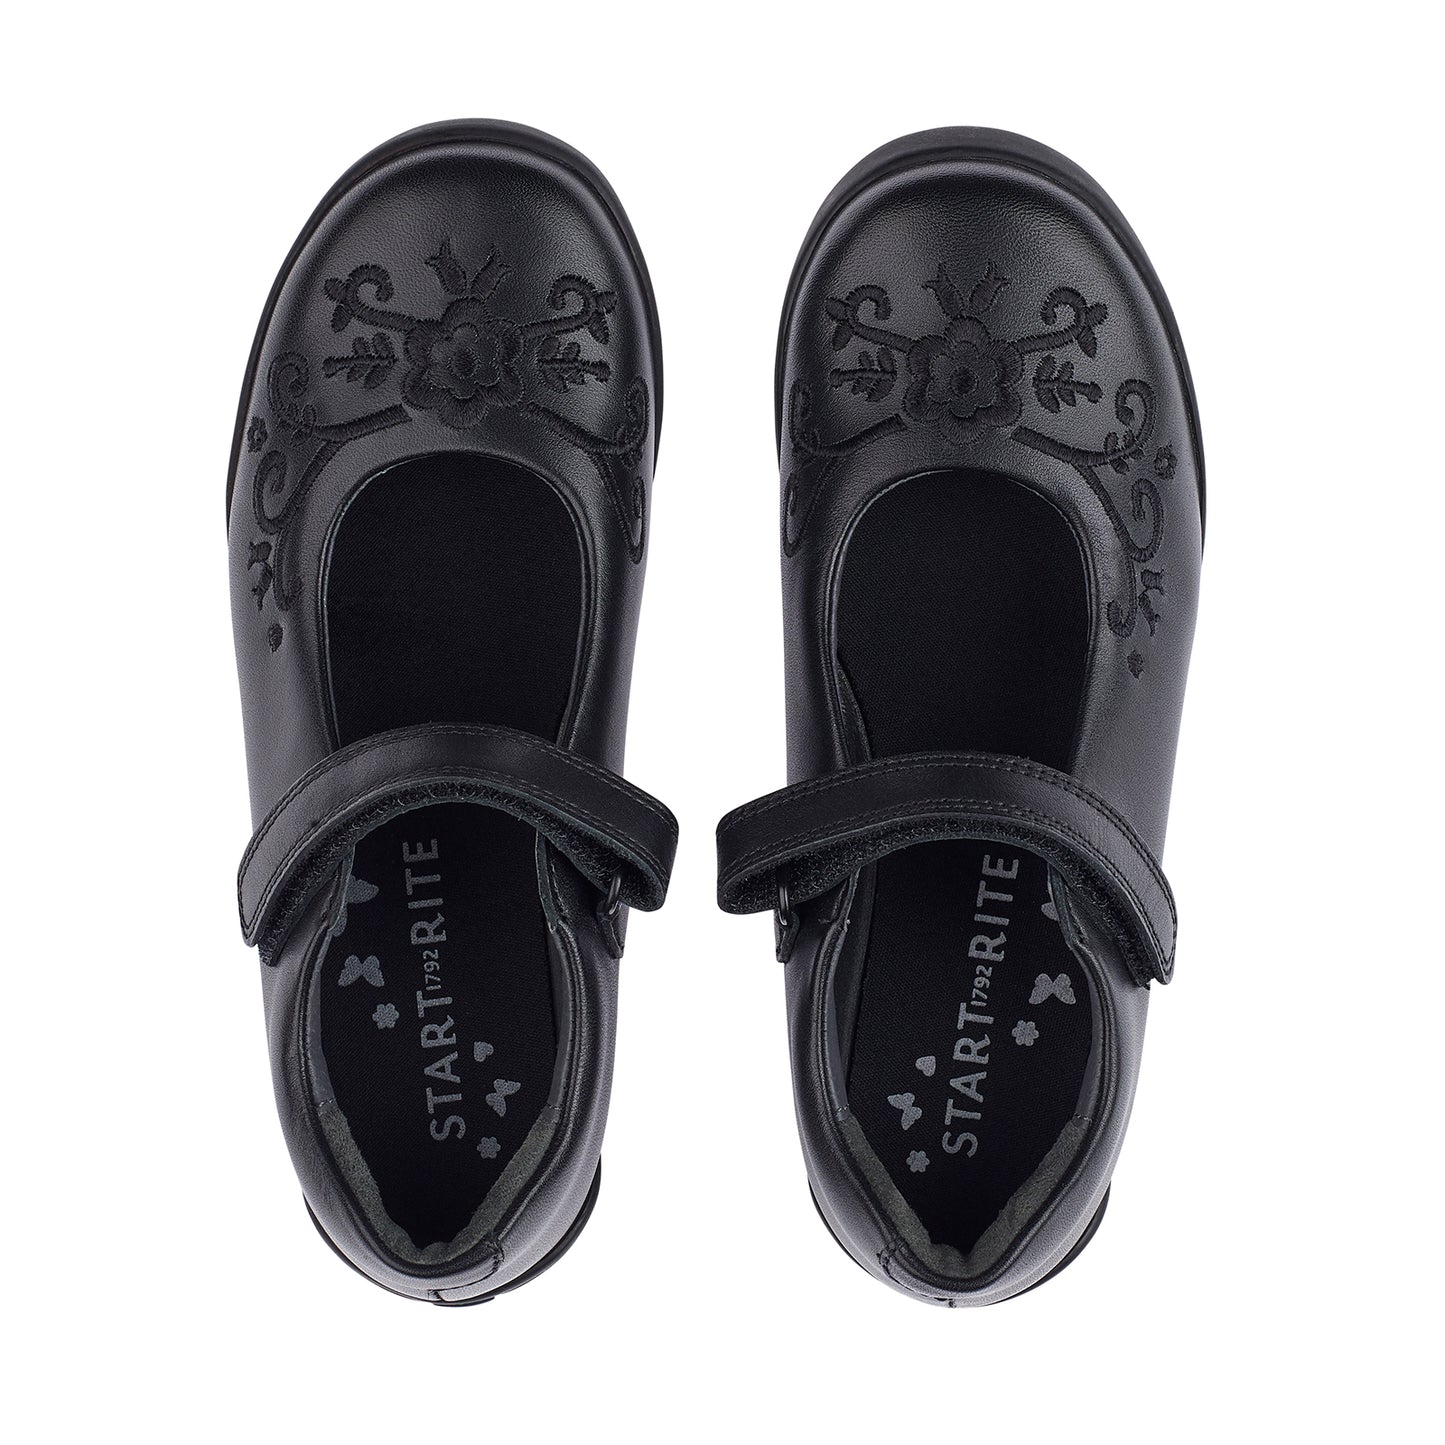 Hopscotch Black Leather Girl's Mary Jane School Shoe